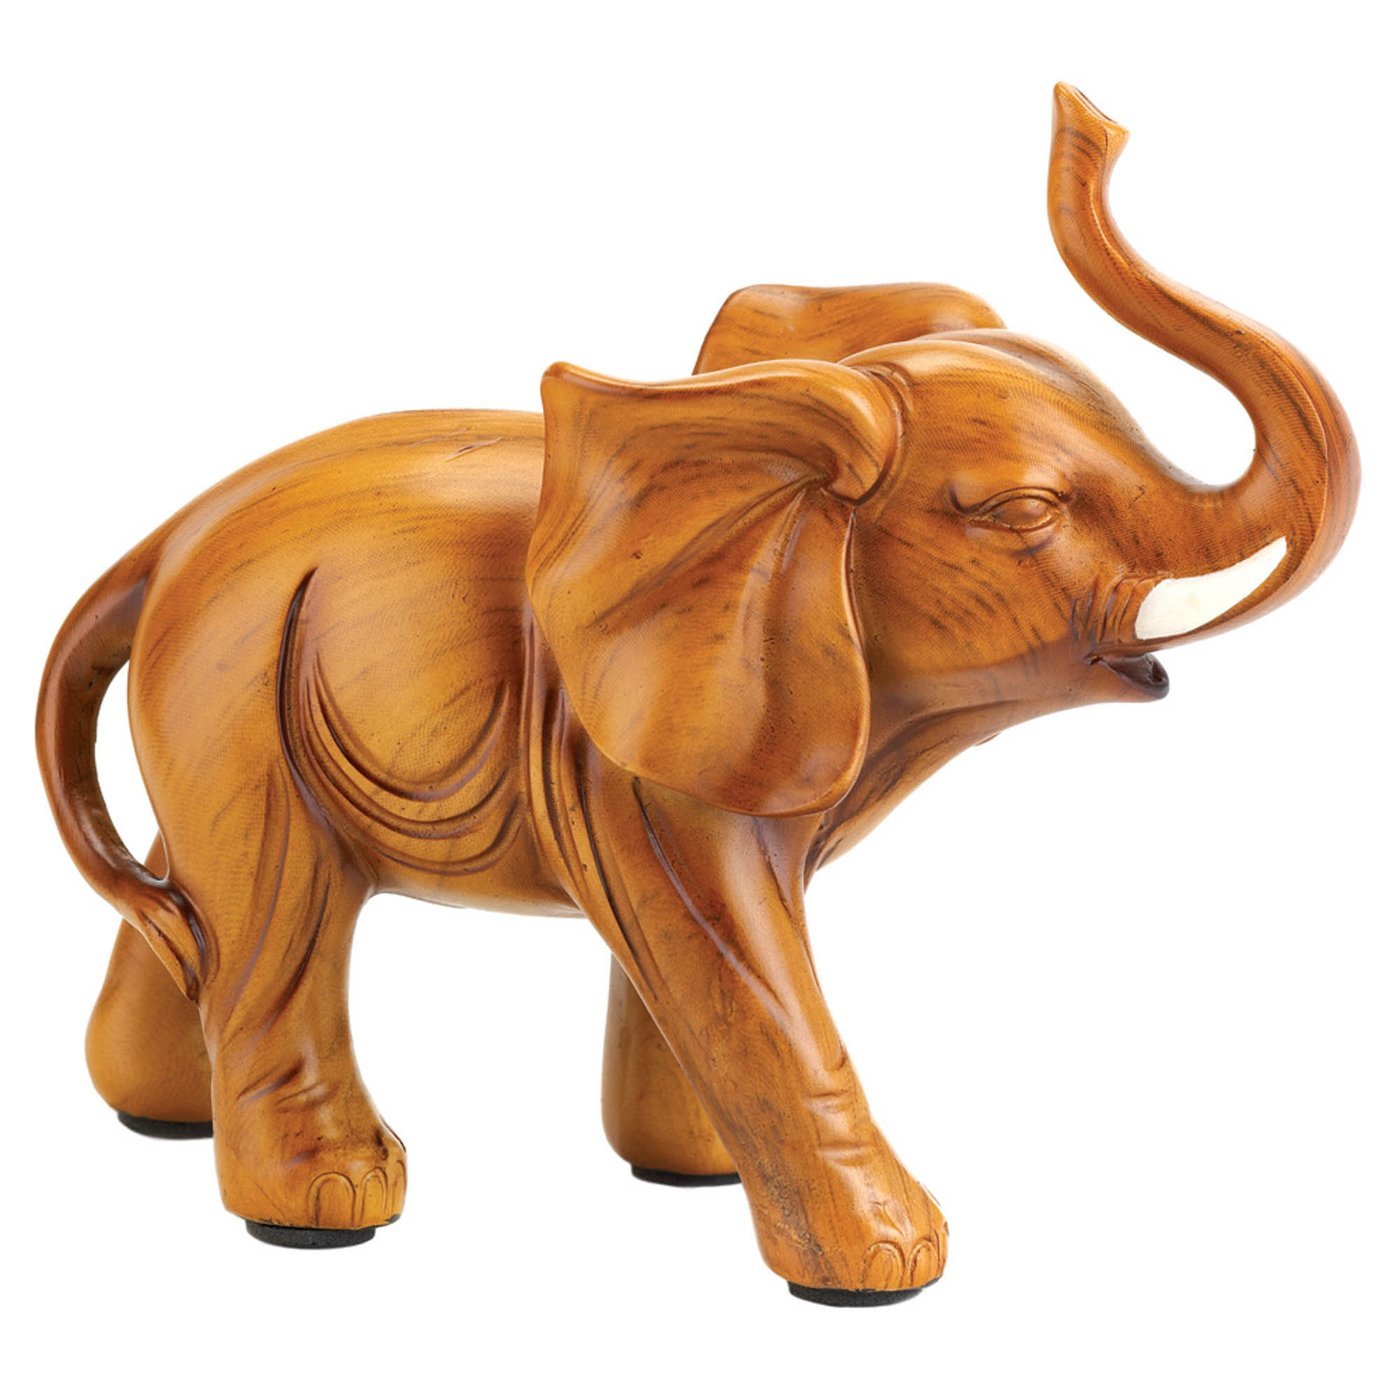 Lucky Elephant Figurine - $30.60